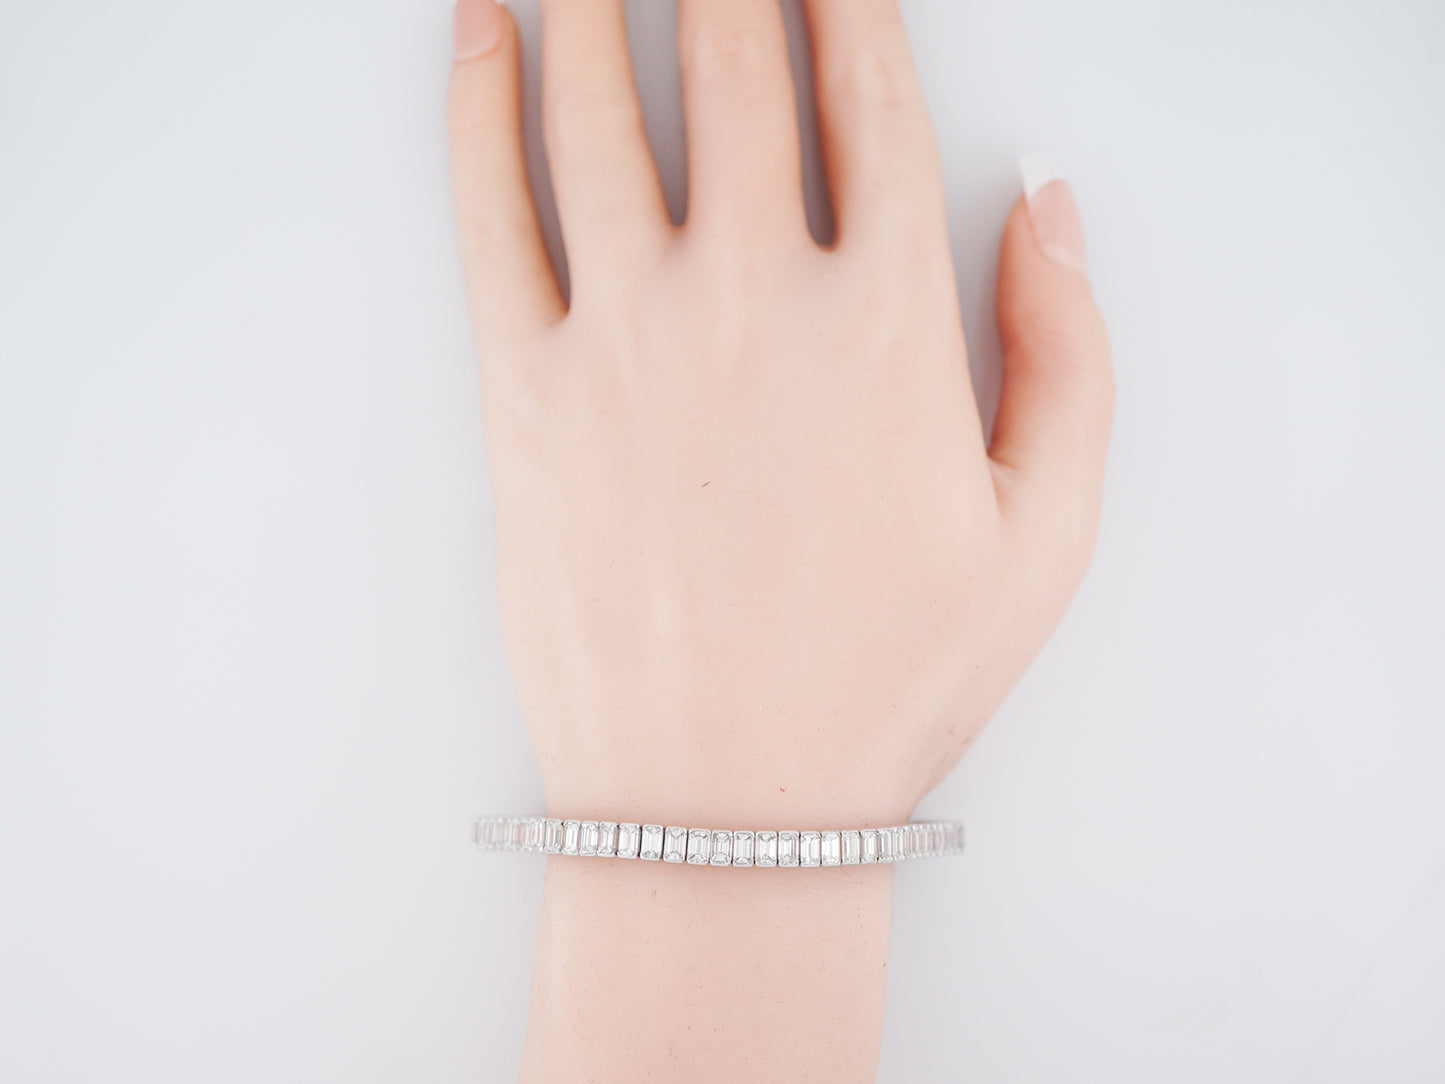 Modern Straight Line Bracelet 12.91 Emerald Cut Diamonds in Platinum